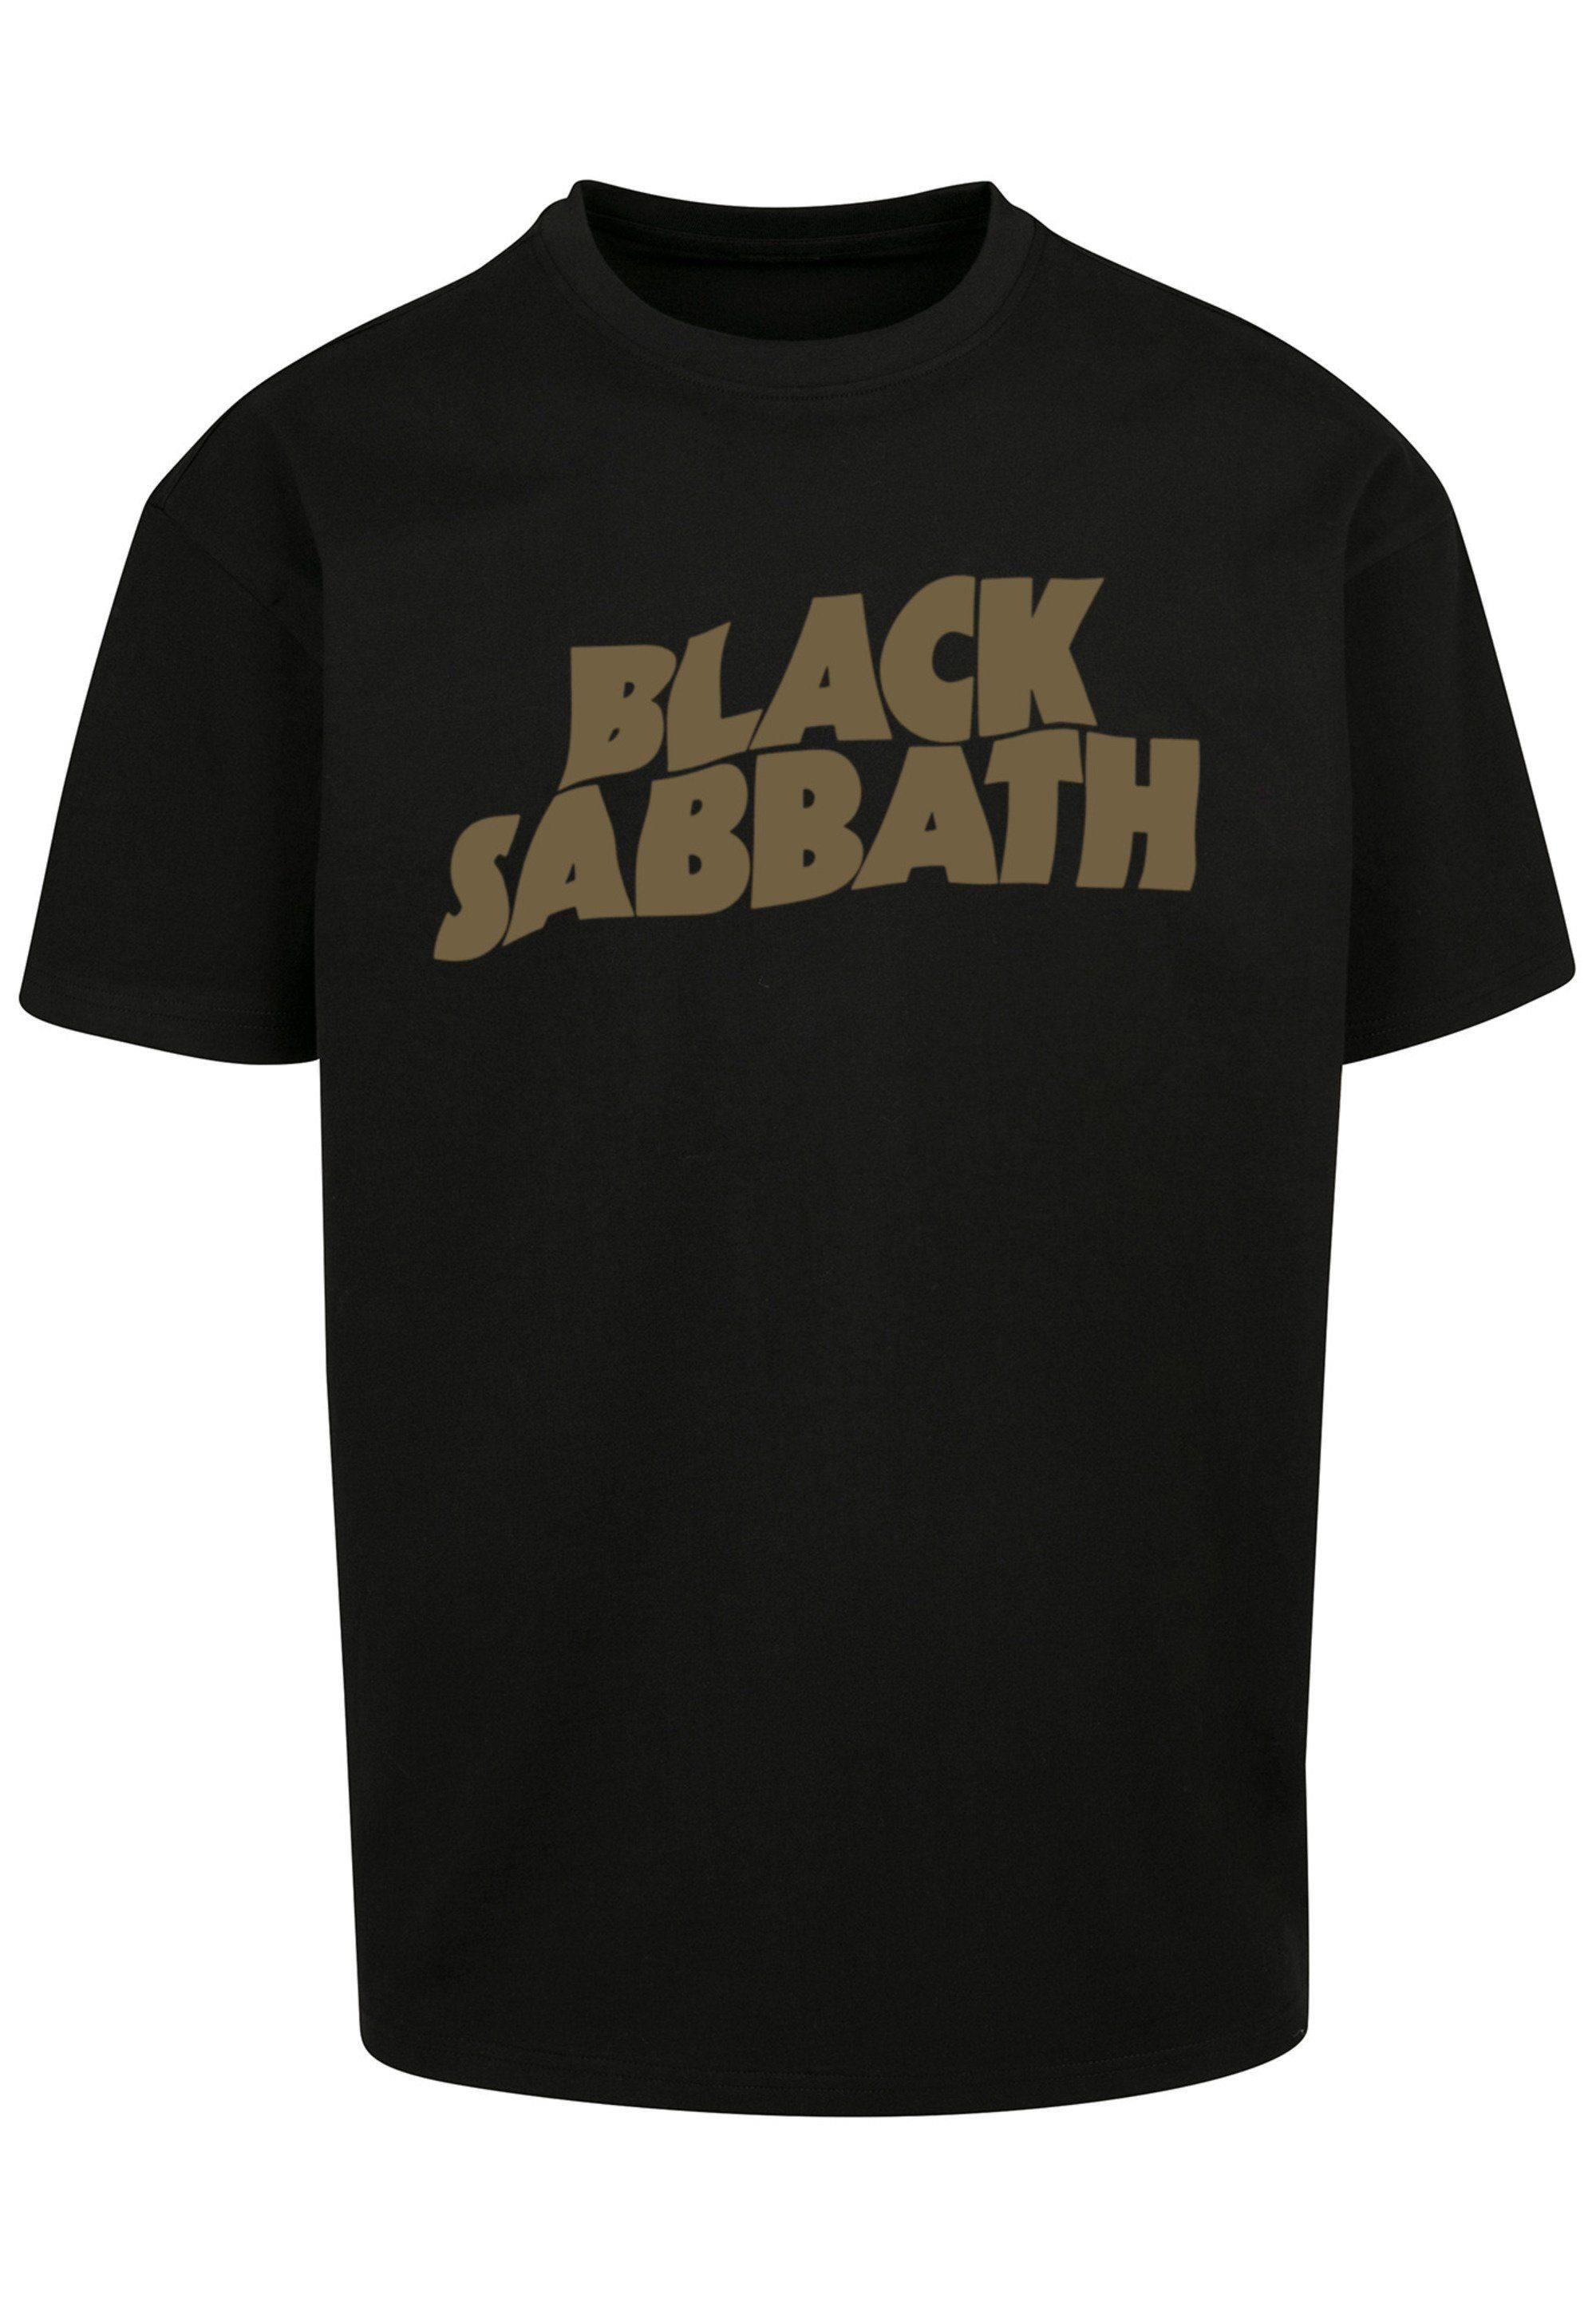 Metal Band F4NT4STIC Zip Black Sabbath US 1978 Black Tour T-Shirt Print